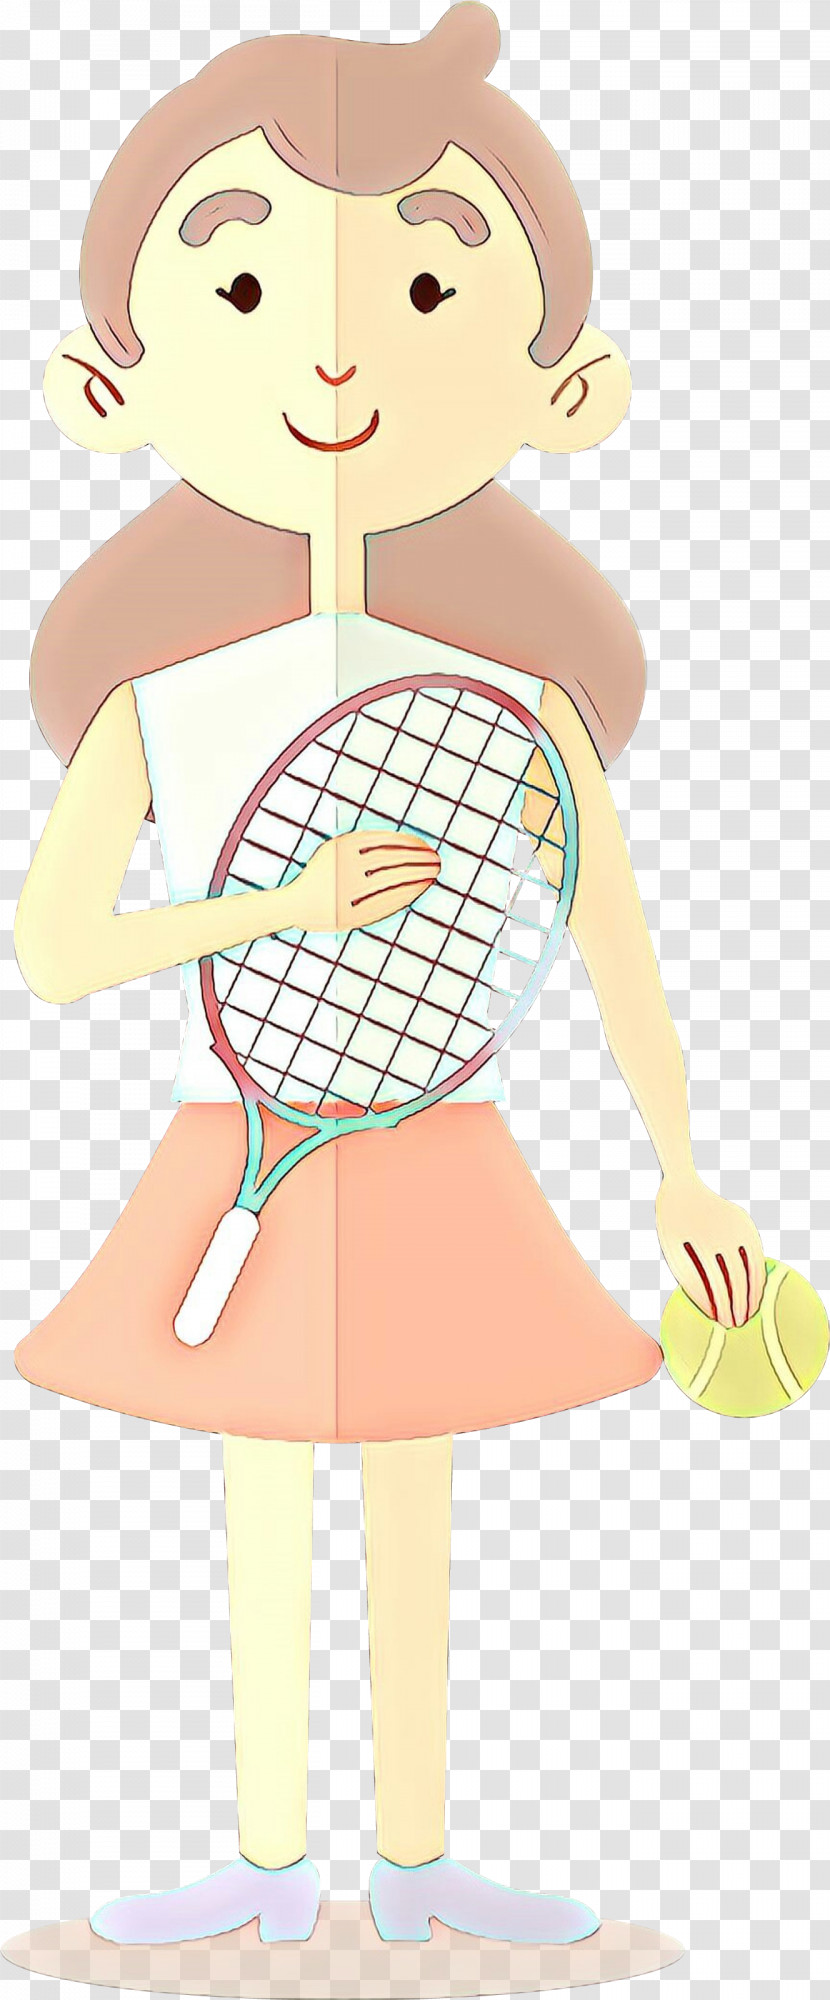 Tennis Racket Racket Cartoon Tennis Tennis Player Transparent PNG